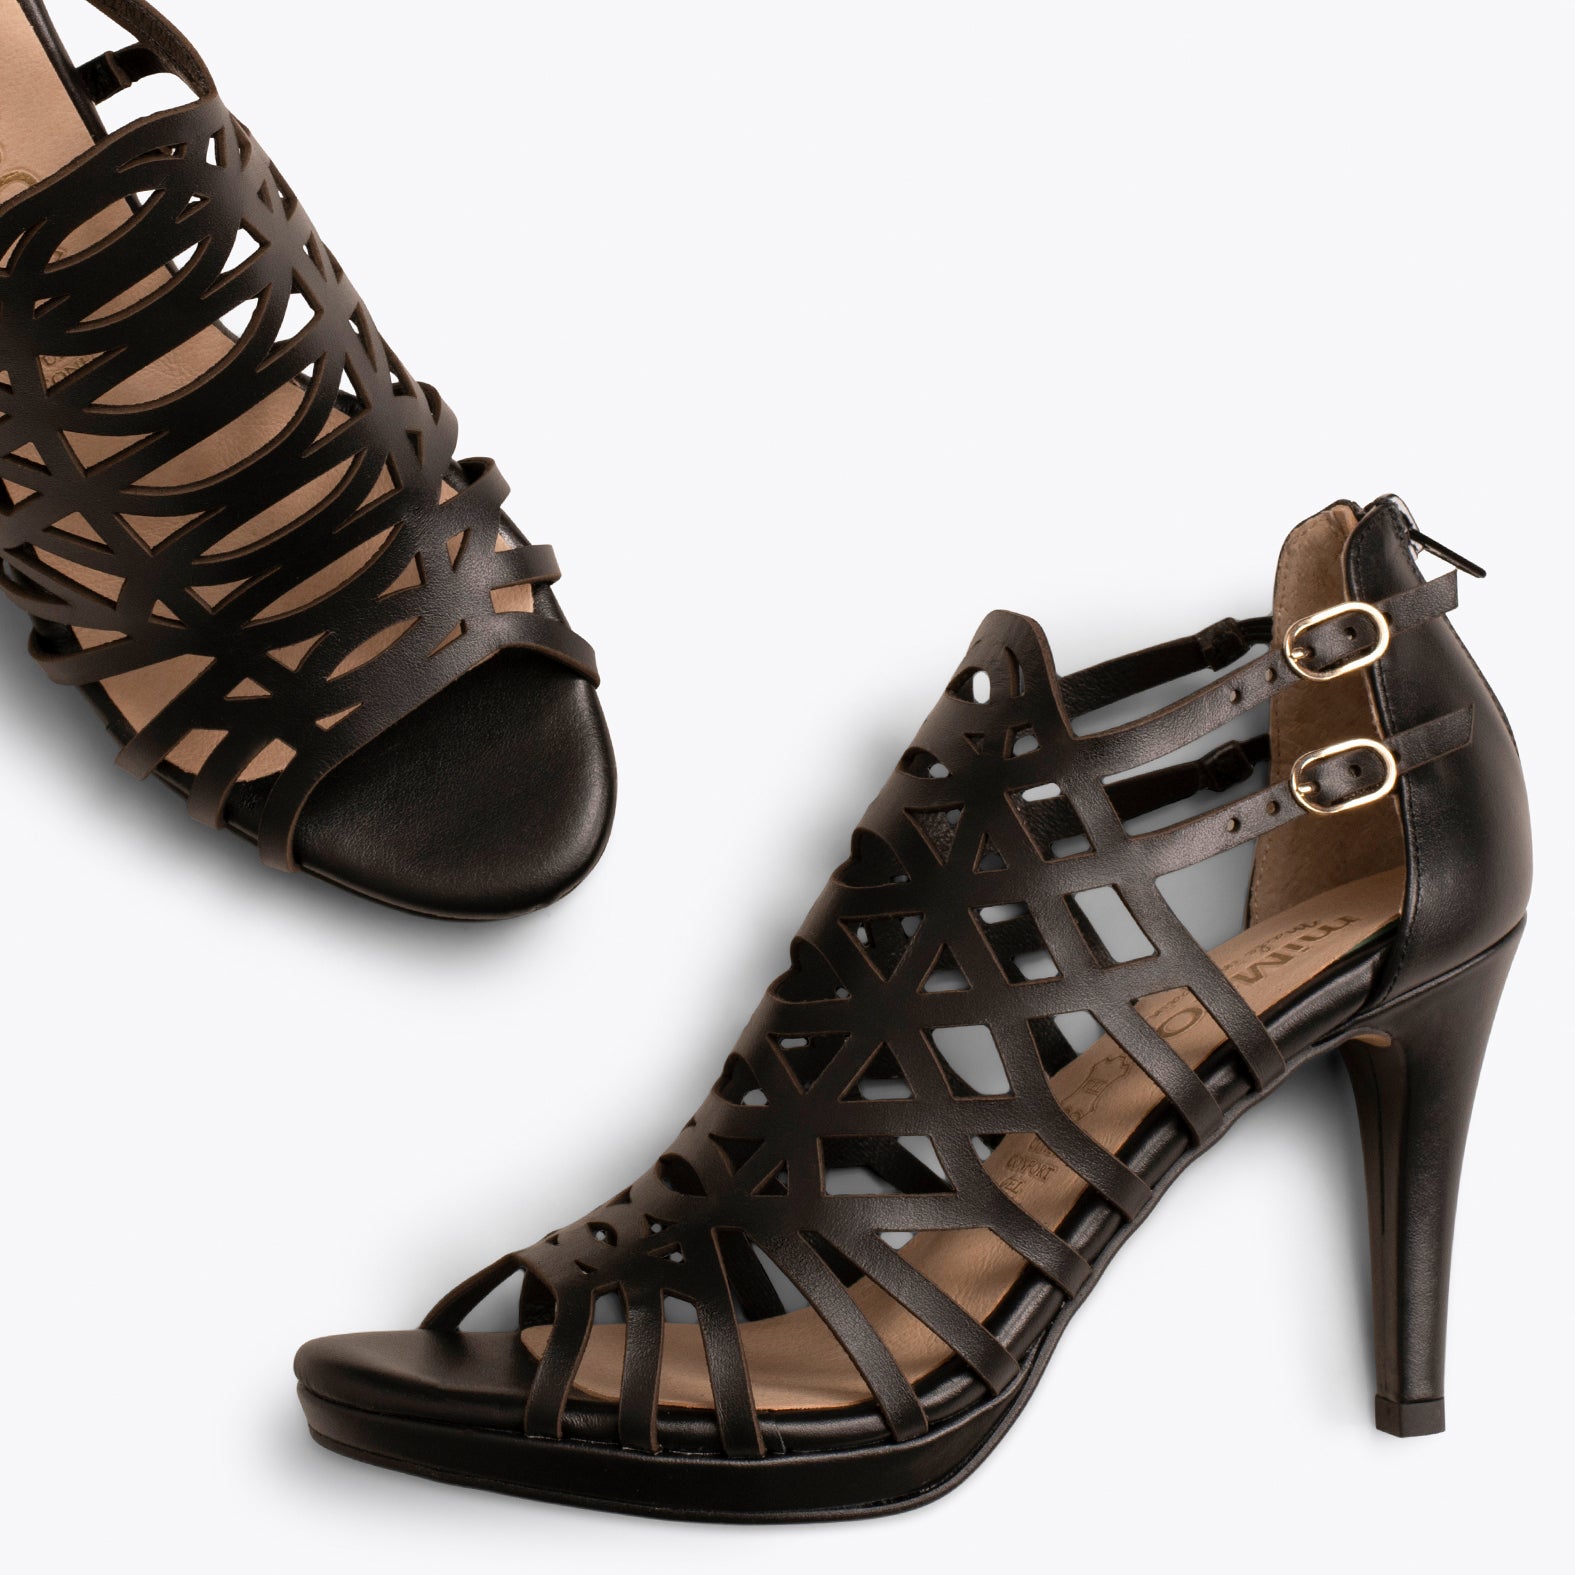 GALA – BLACK high heel party sandals